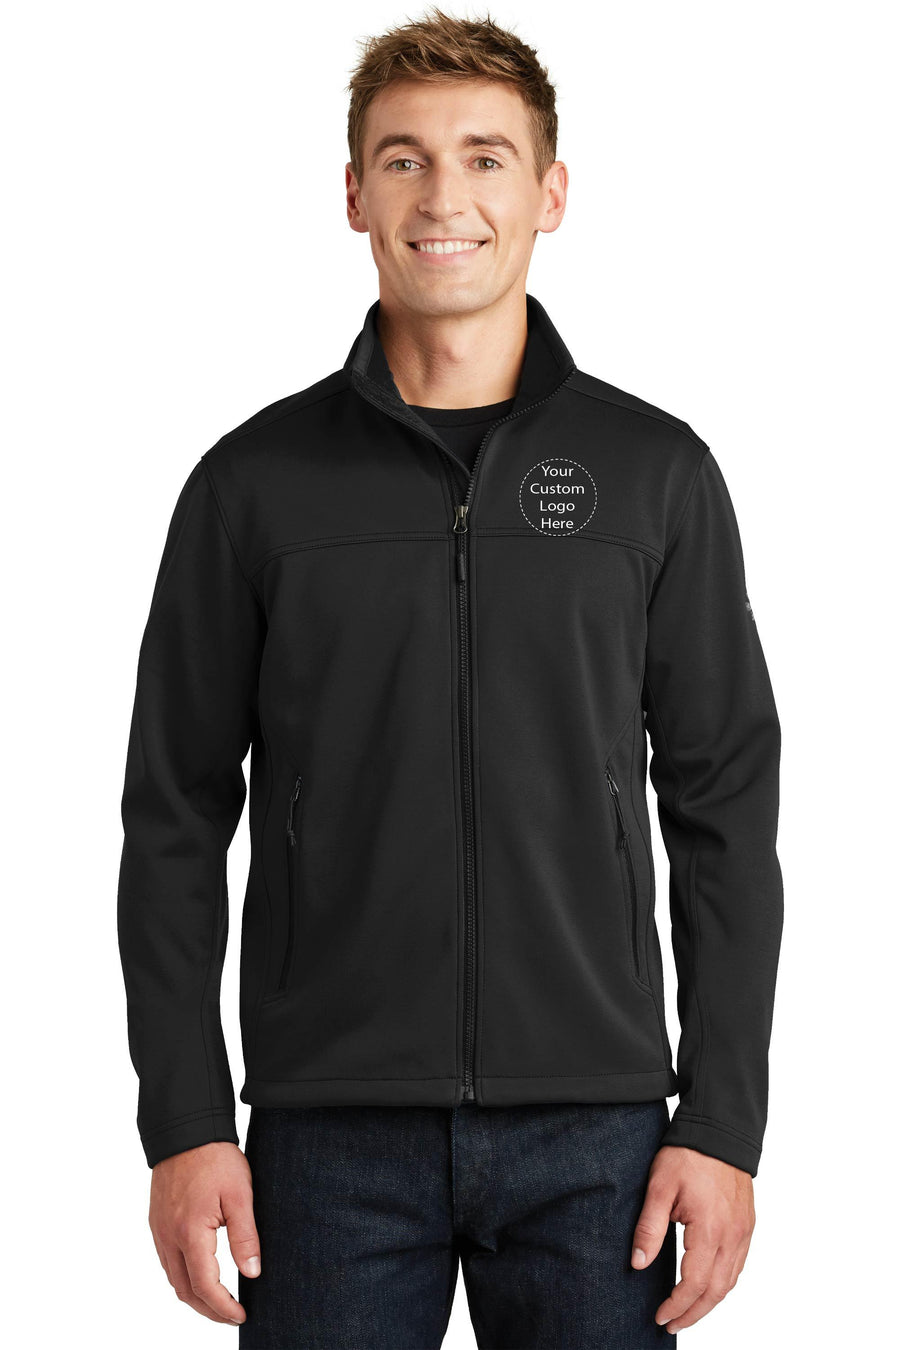 Soft Shell Jacket, KW-SMNF0A3LGX North Face® Men's Ridgeline Soft Shell Jacket